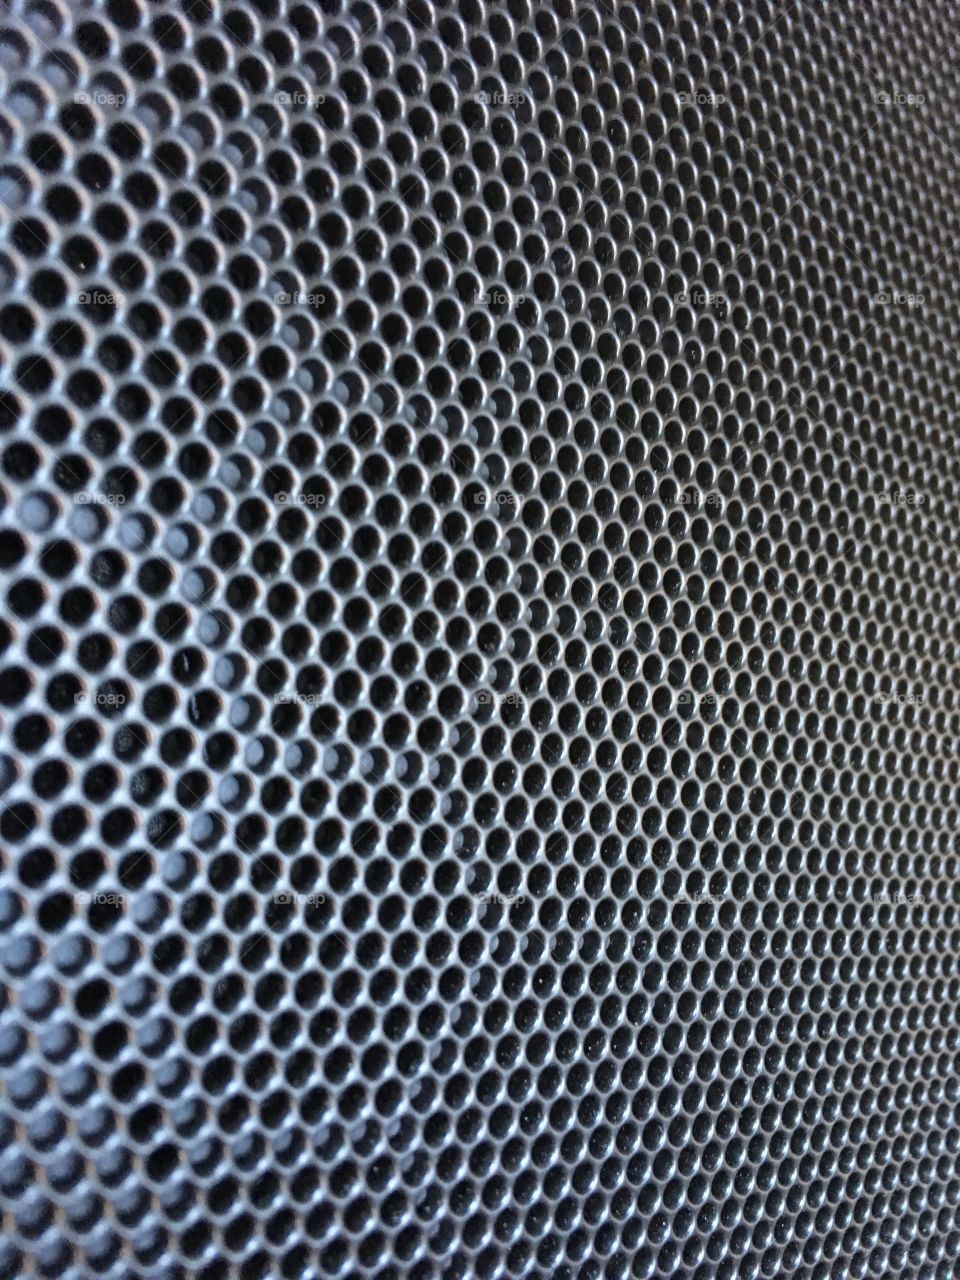 Close up texture. Metal speaker. Circles honeycomb shapes. 